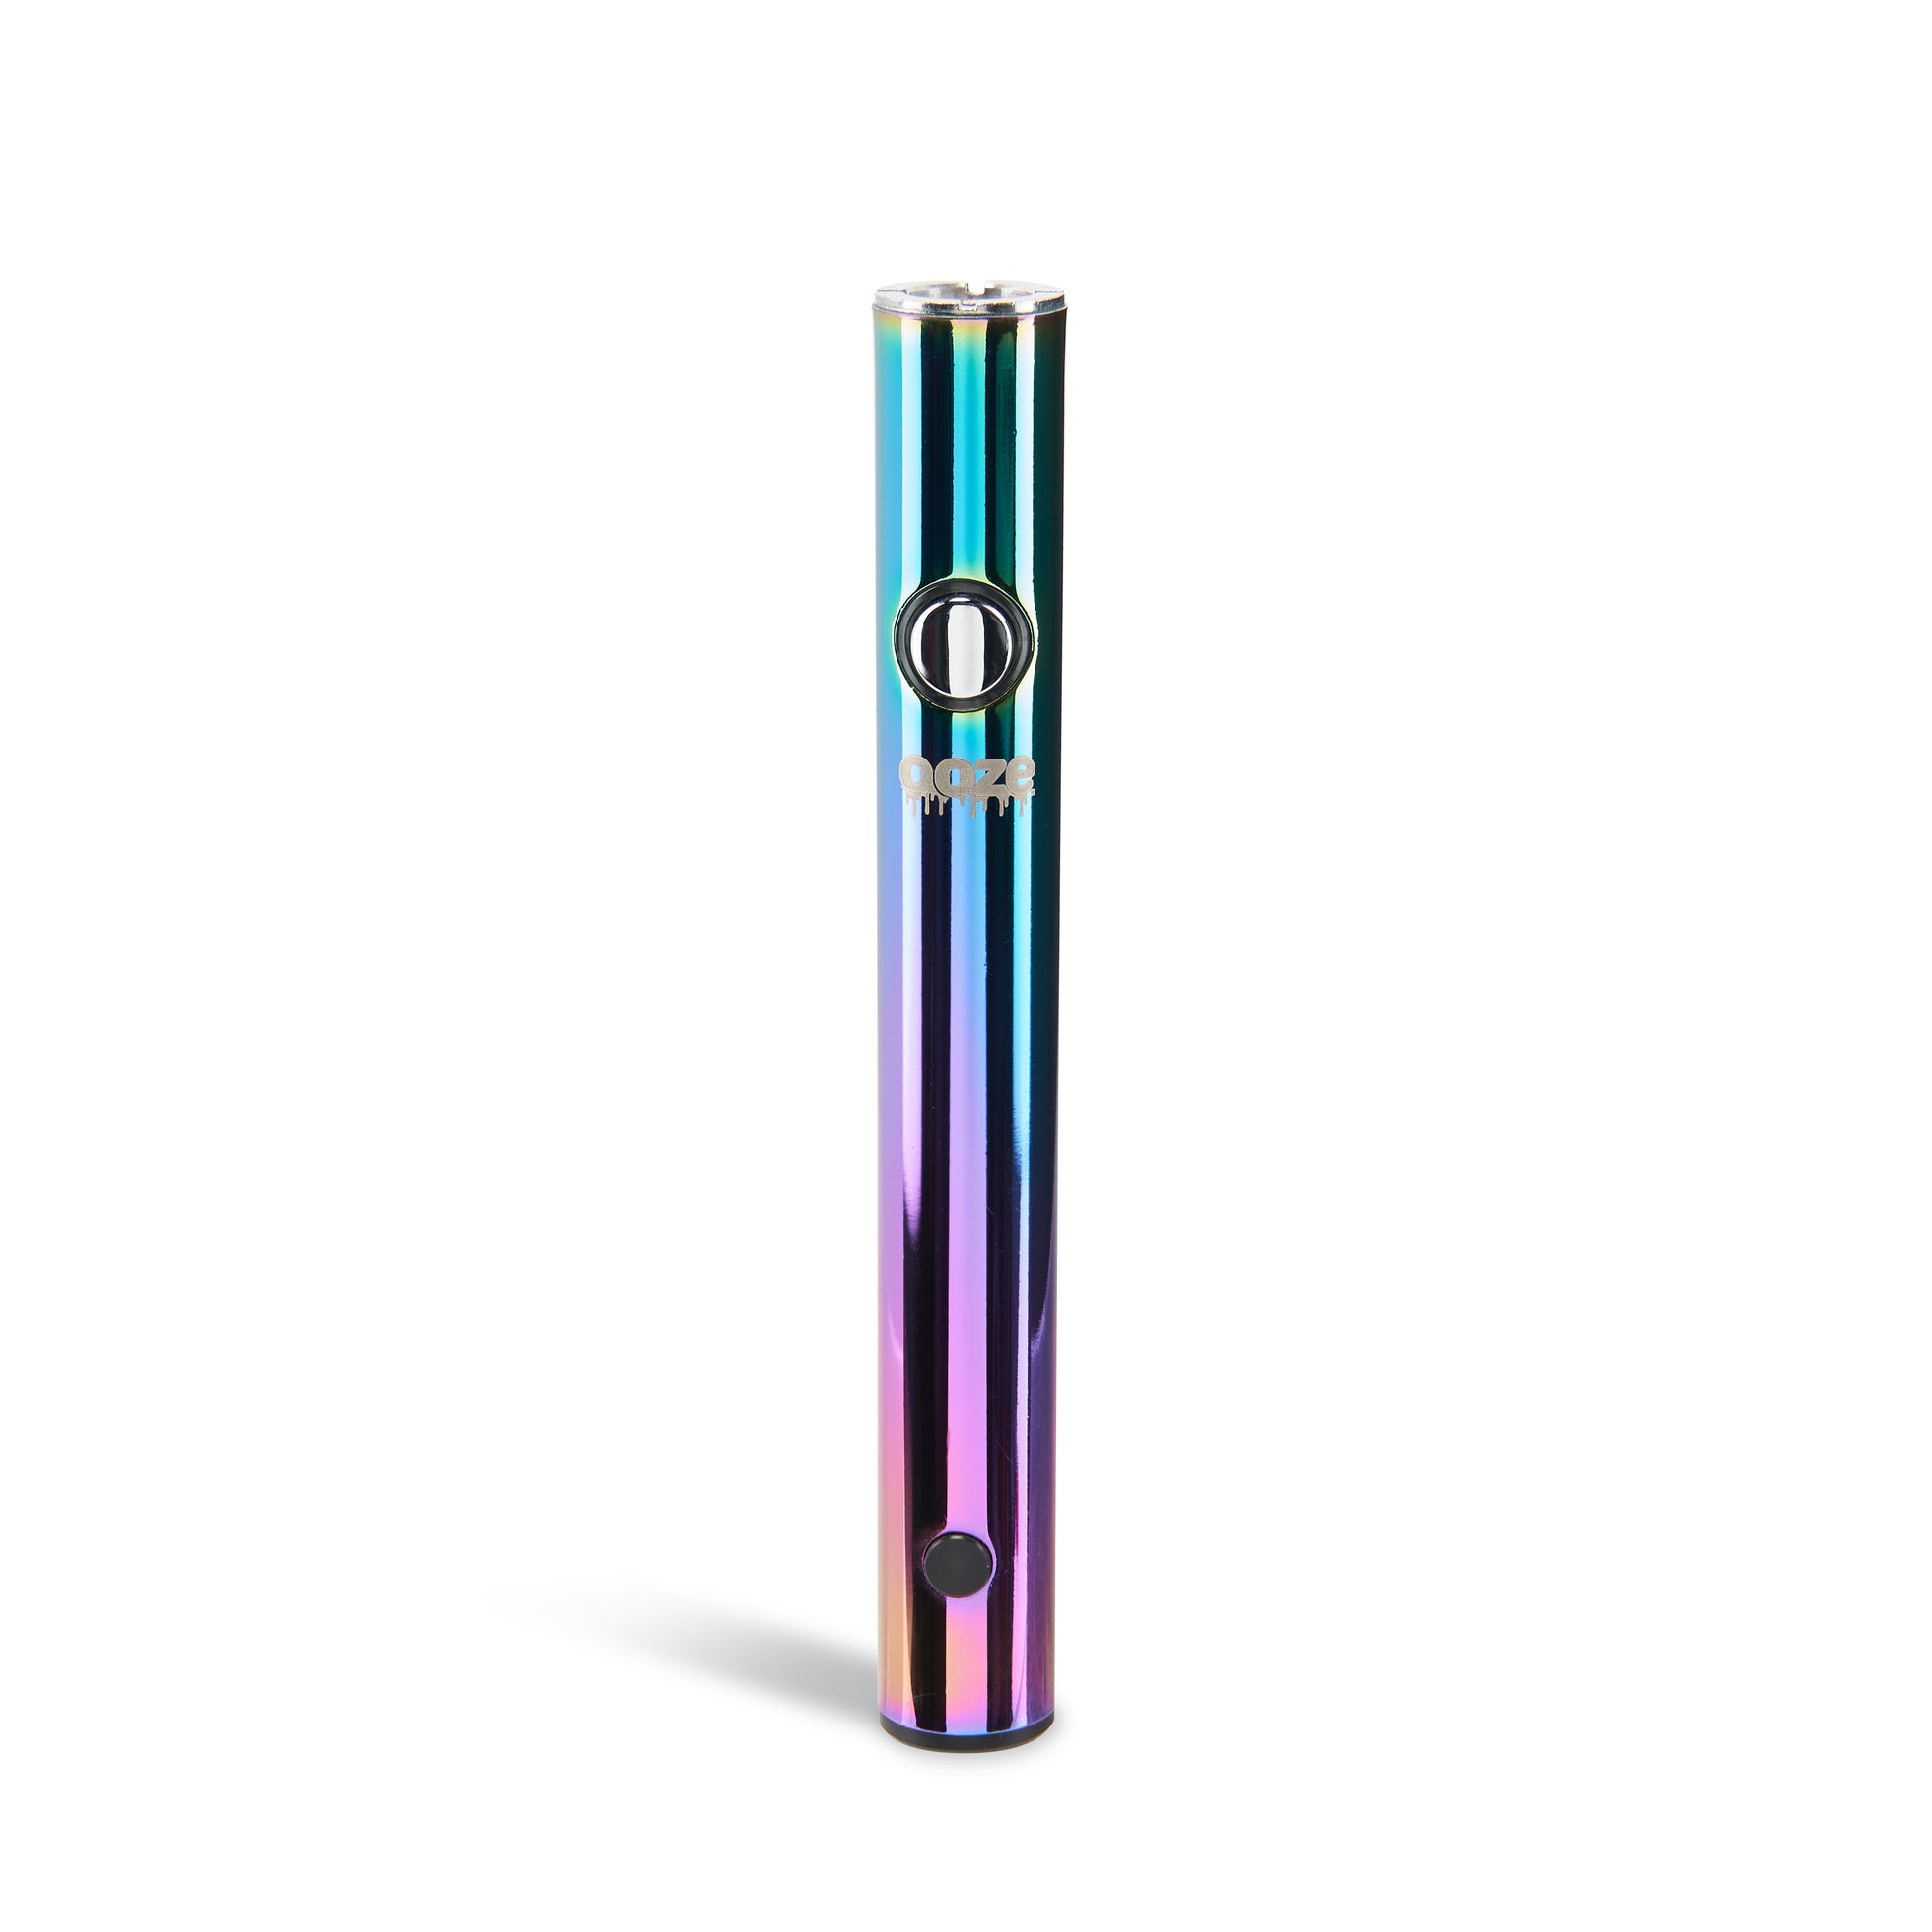 The rainbow Ooze Wink flashlight pen is standing straight upright